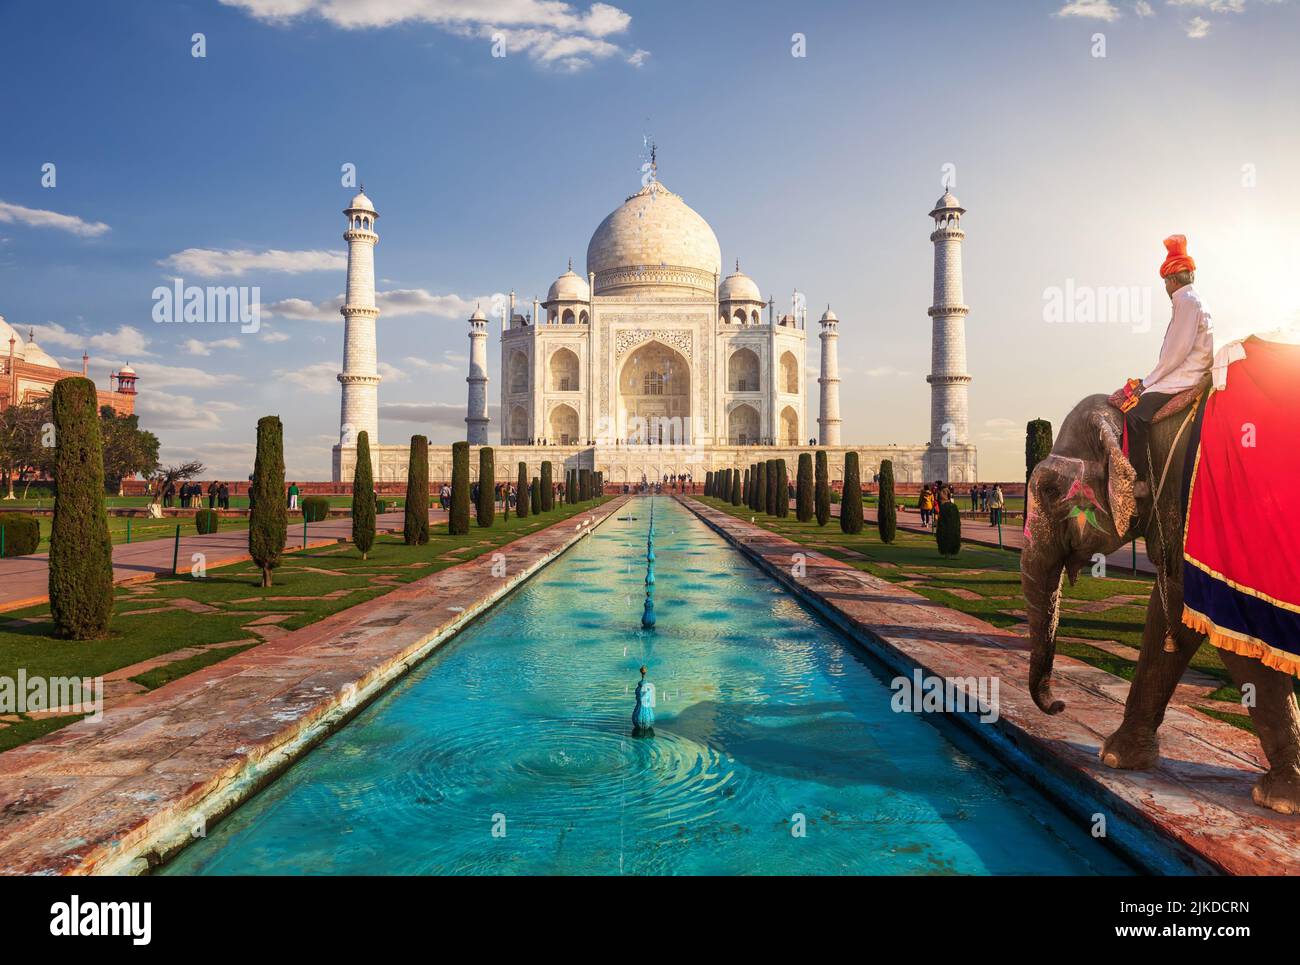 Taj Mahal and an Indian man on the elephant, Agra, India. Stock Photo